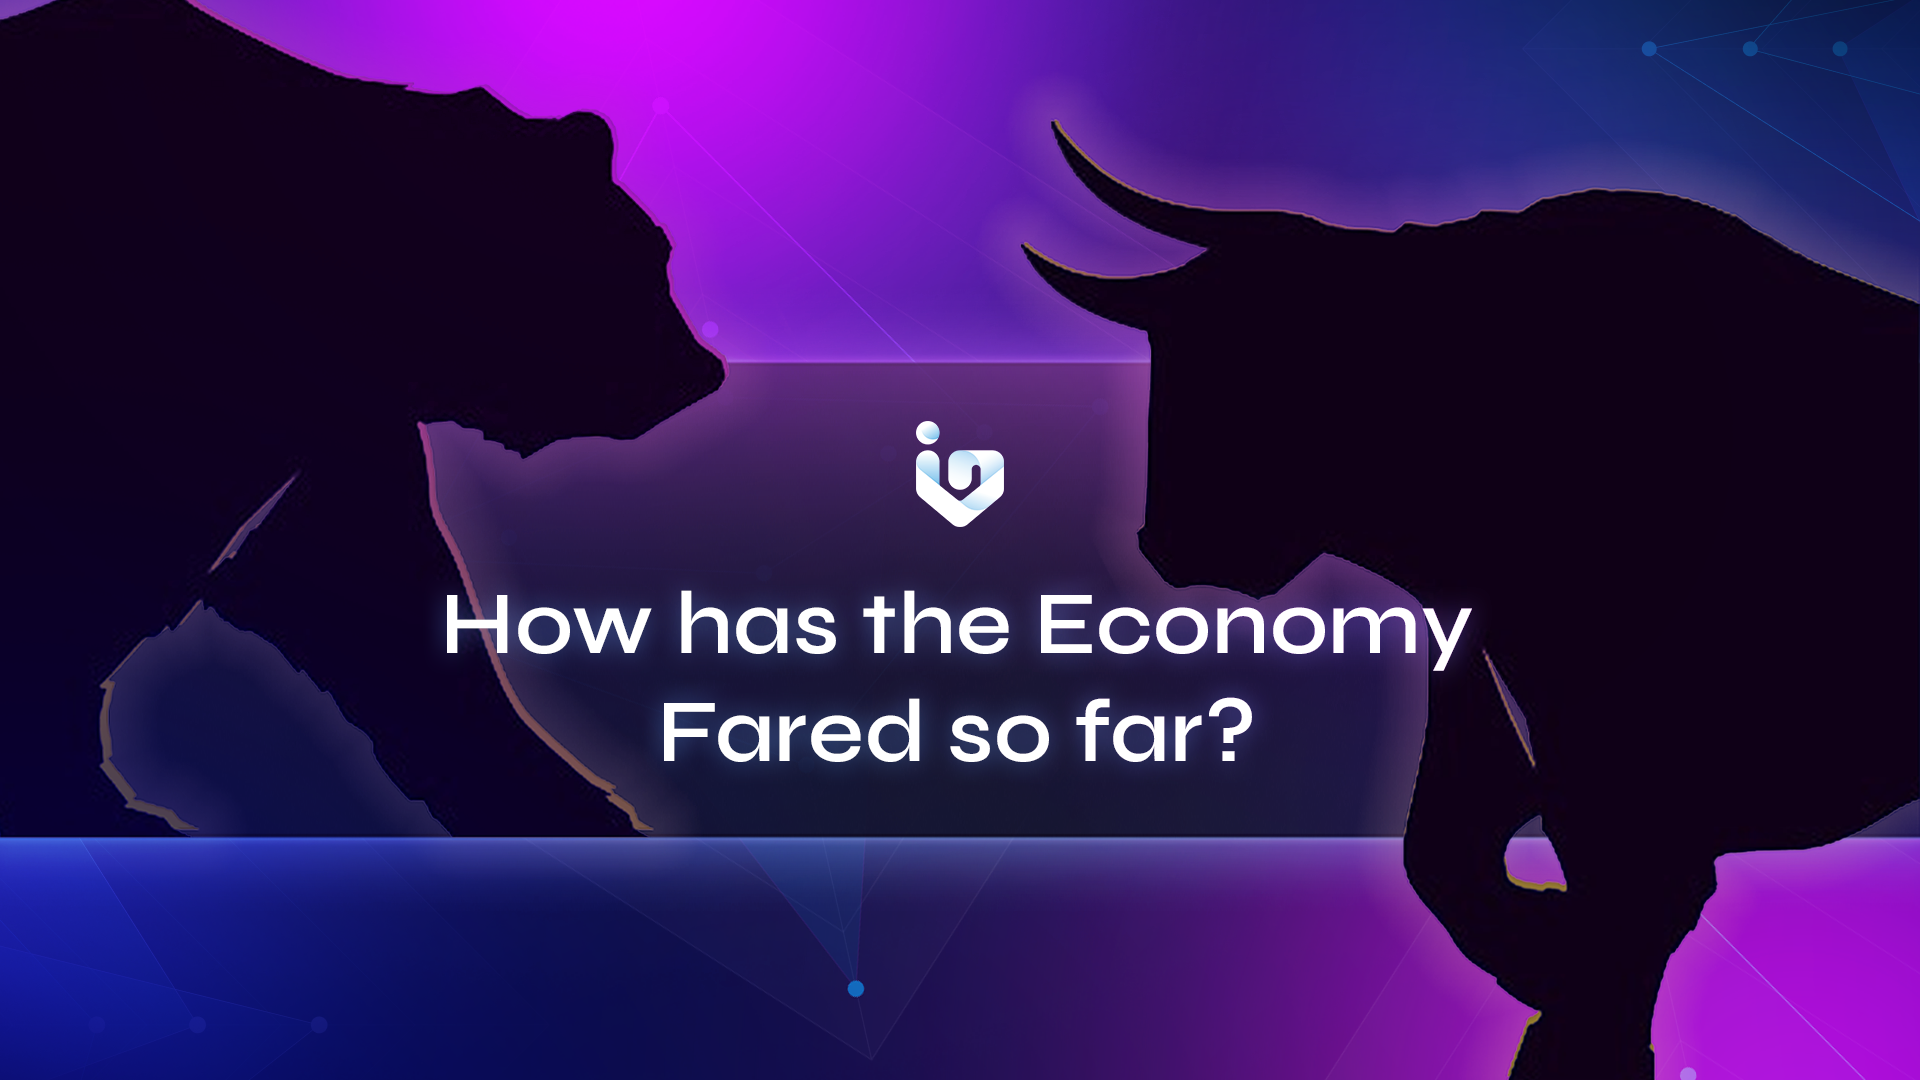 How has the economy fared so far?